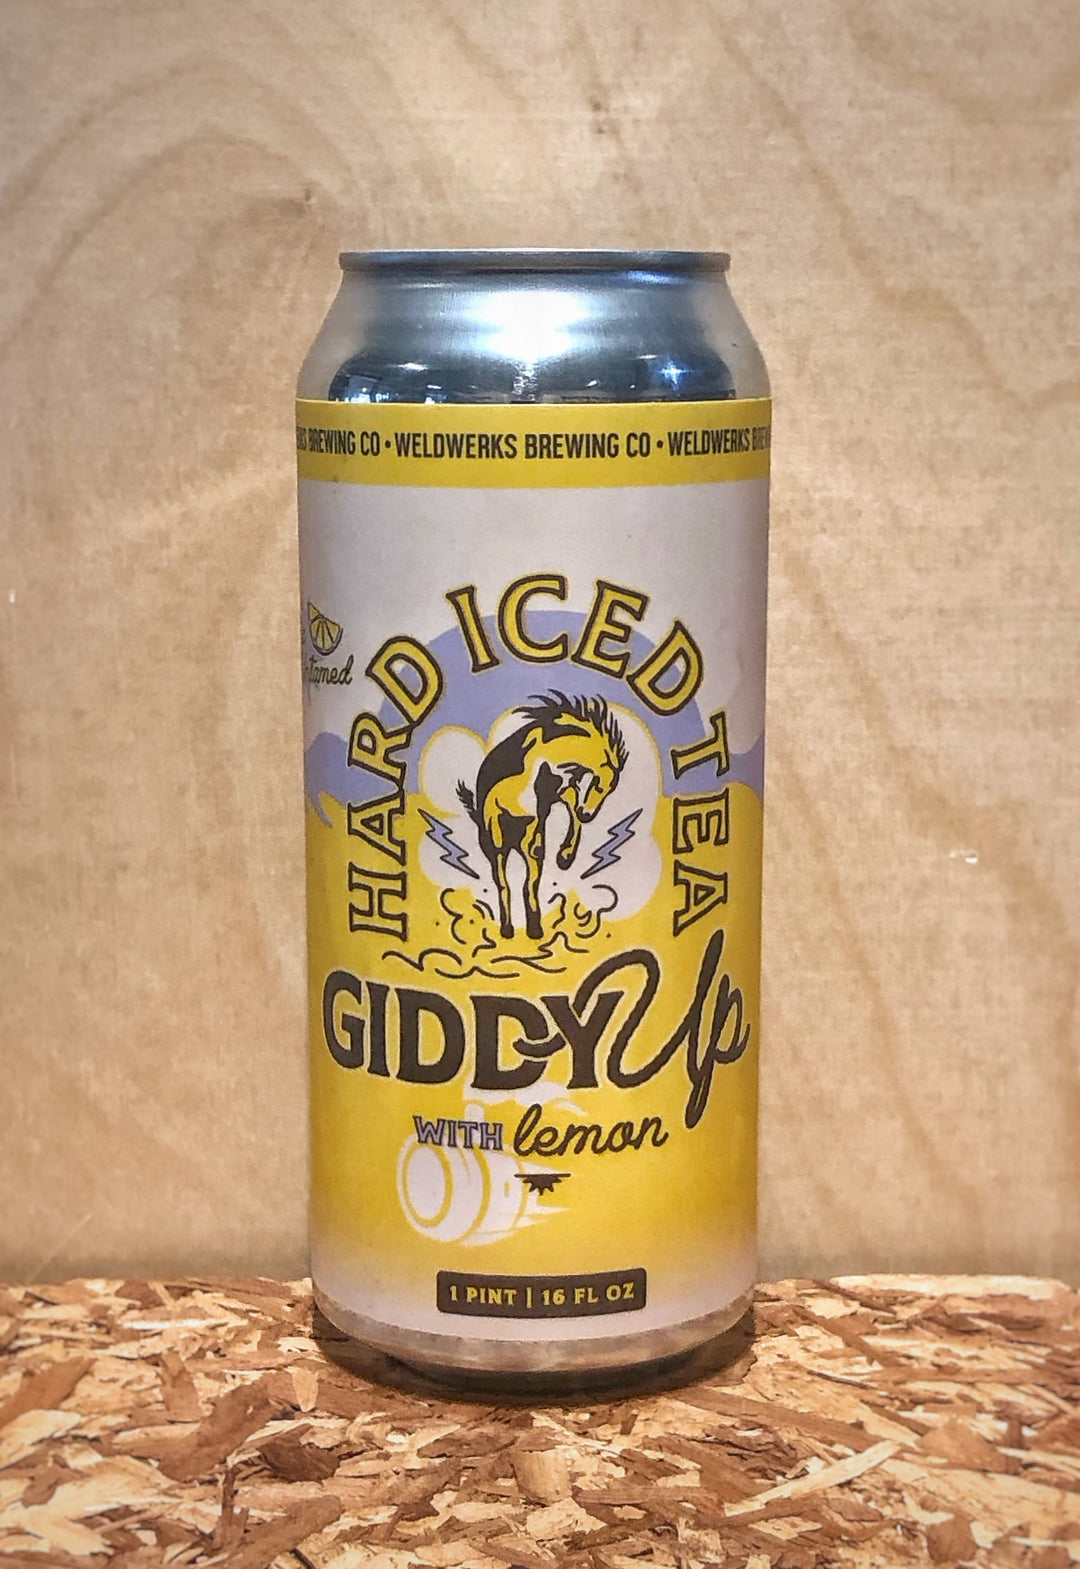 WeldWerks Brewing Co. 'Giddy Up' Hard Iced Tea with Lemon (Greeley, CO)